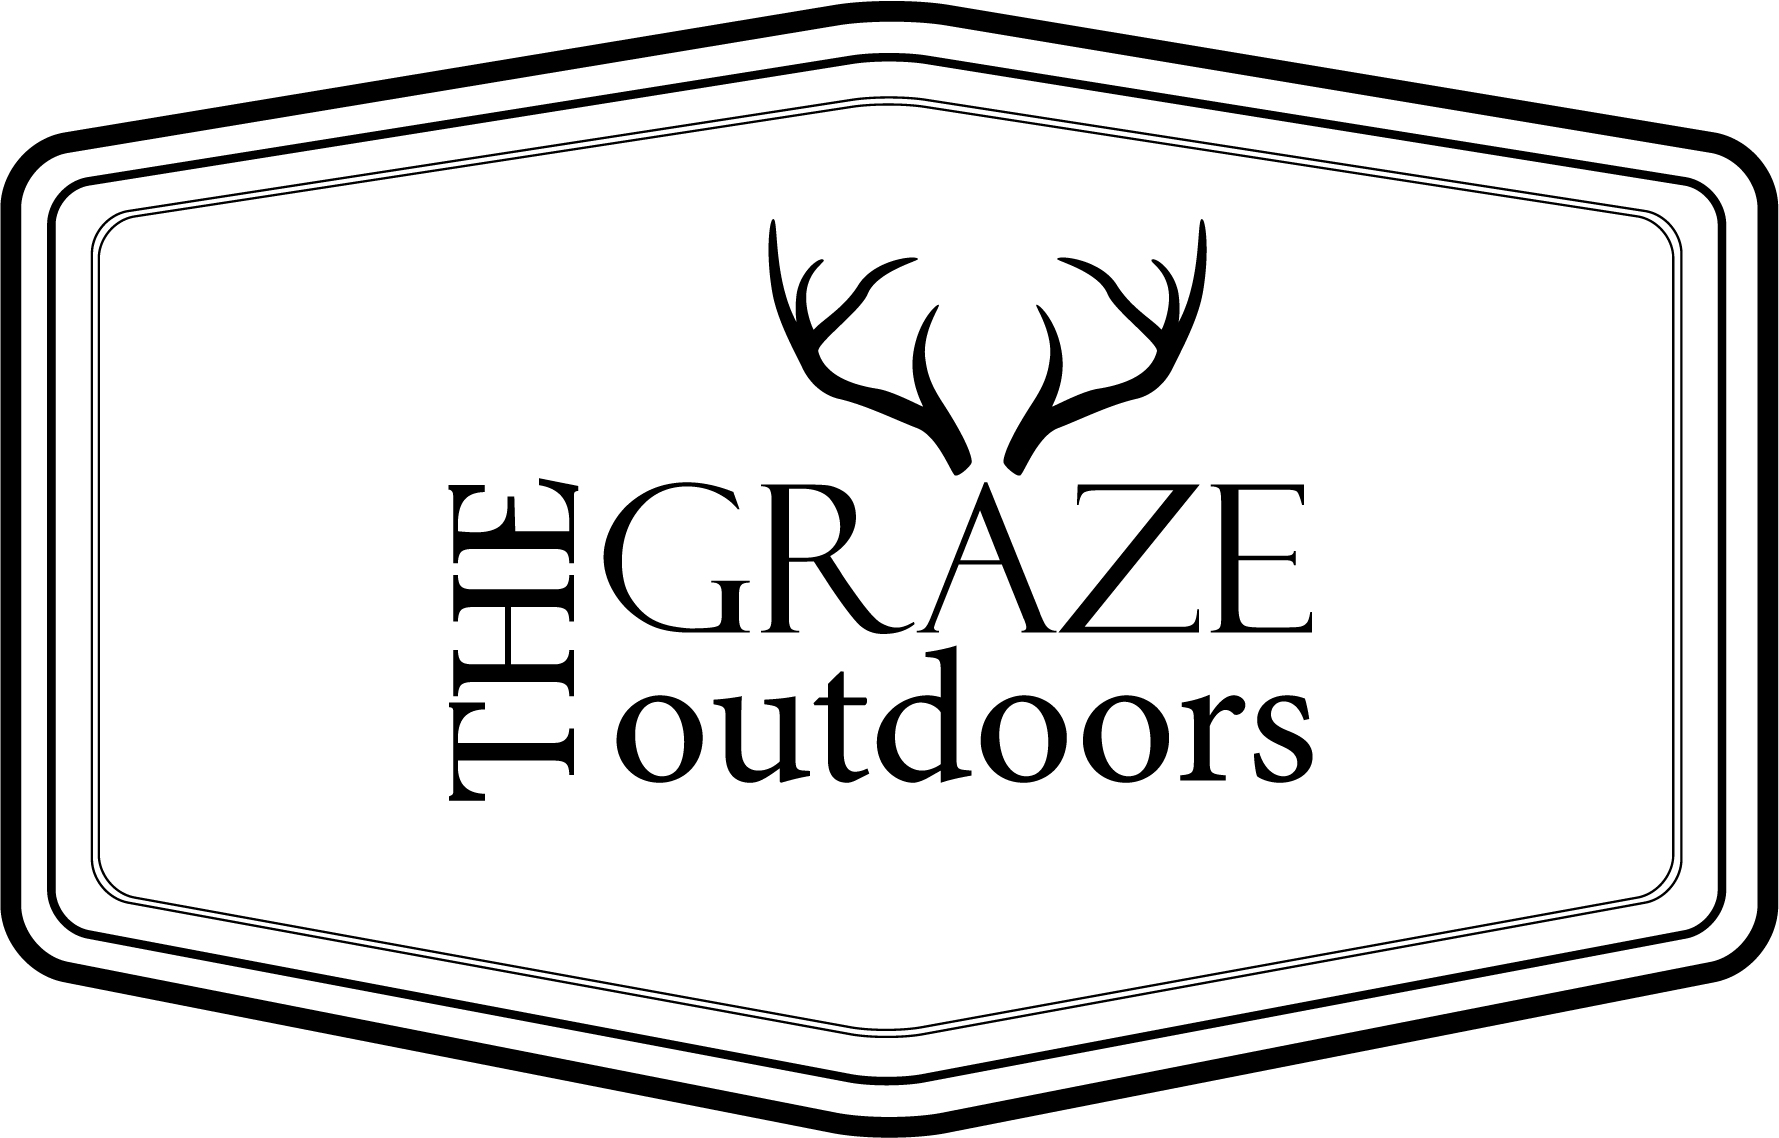 The Graze Outdoors